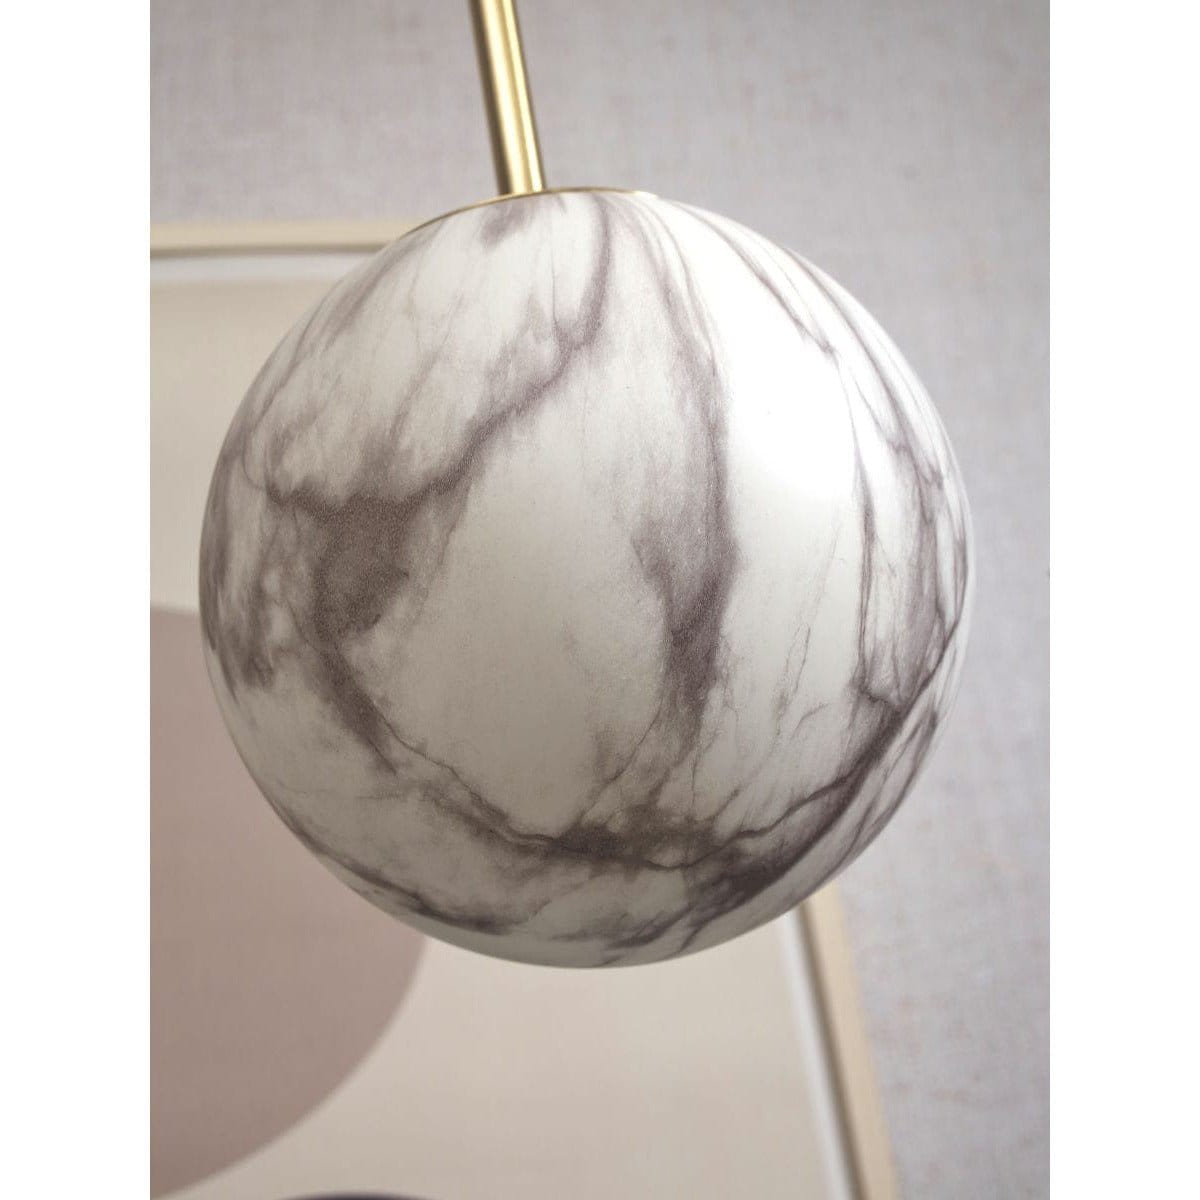 It's About RoMi Pendant lights Carrara Globe Pendant Light, small medium, or large